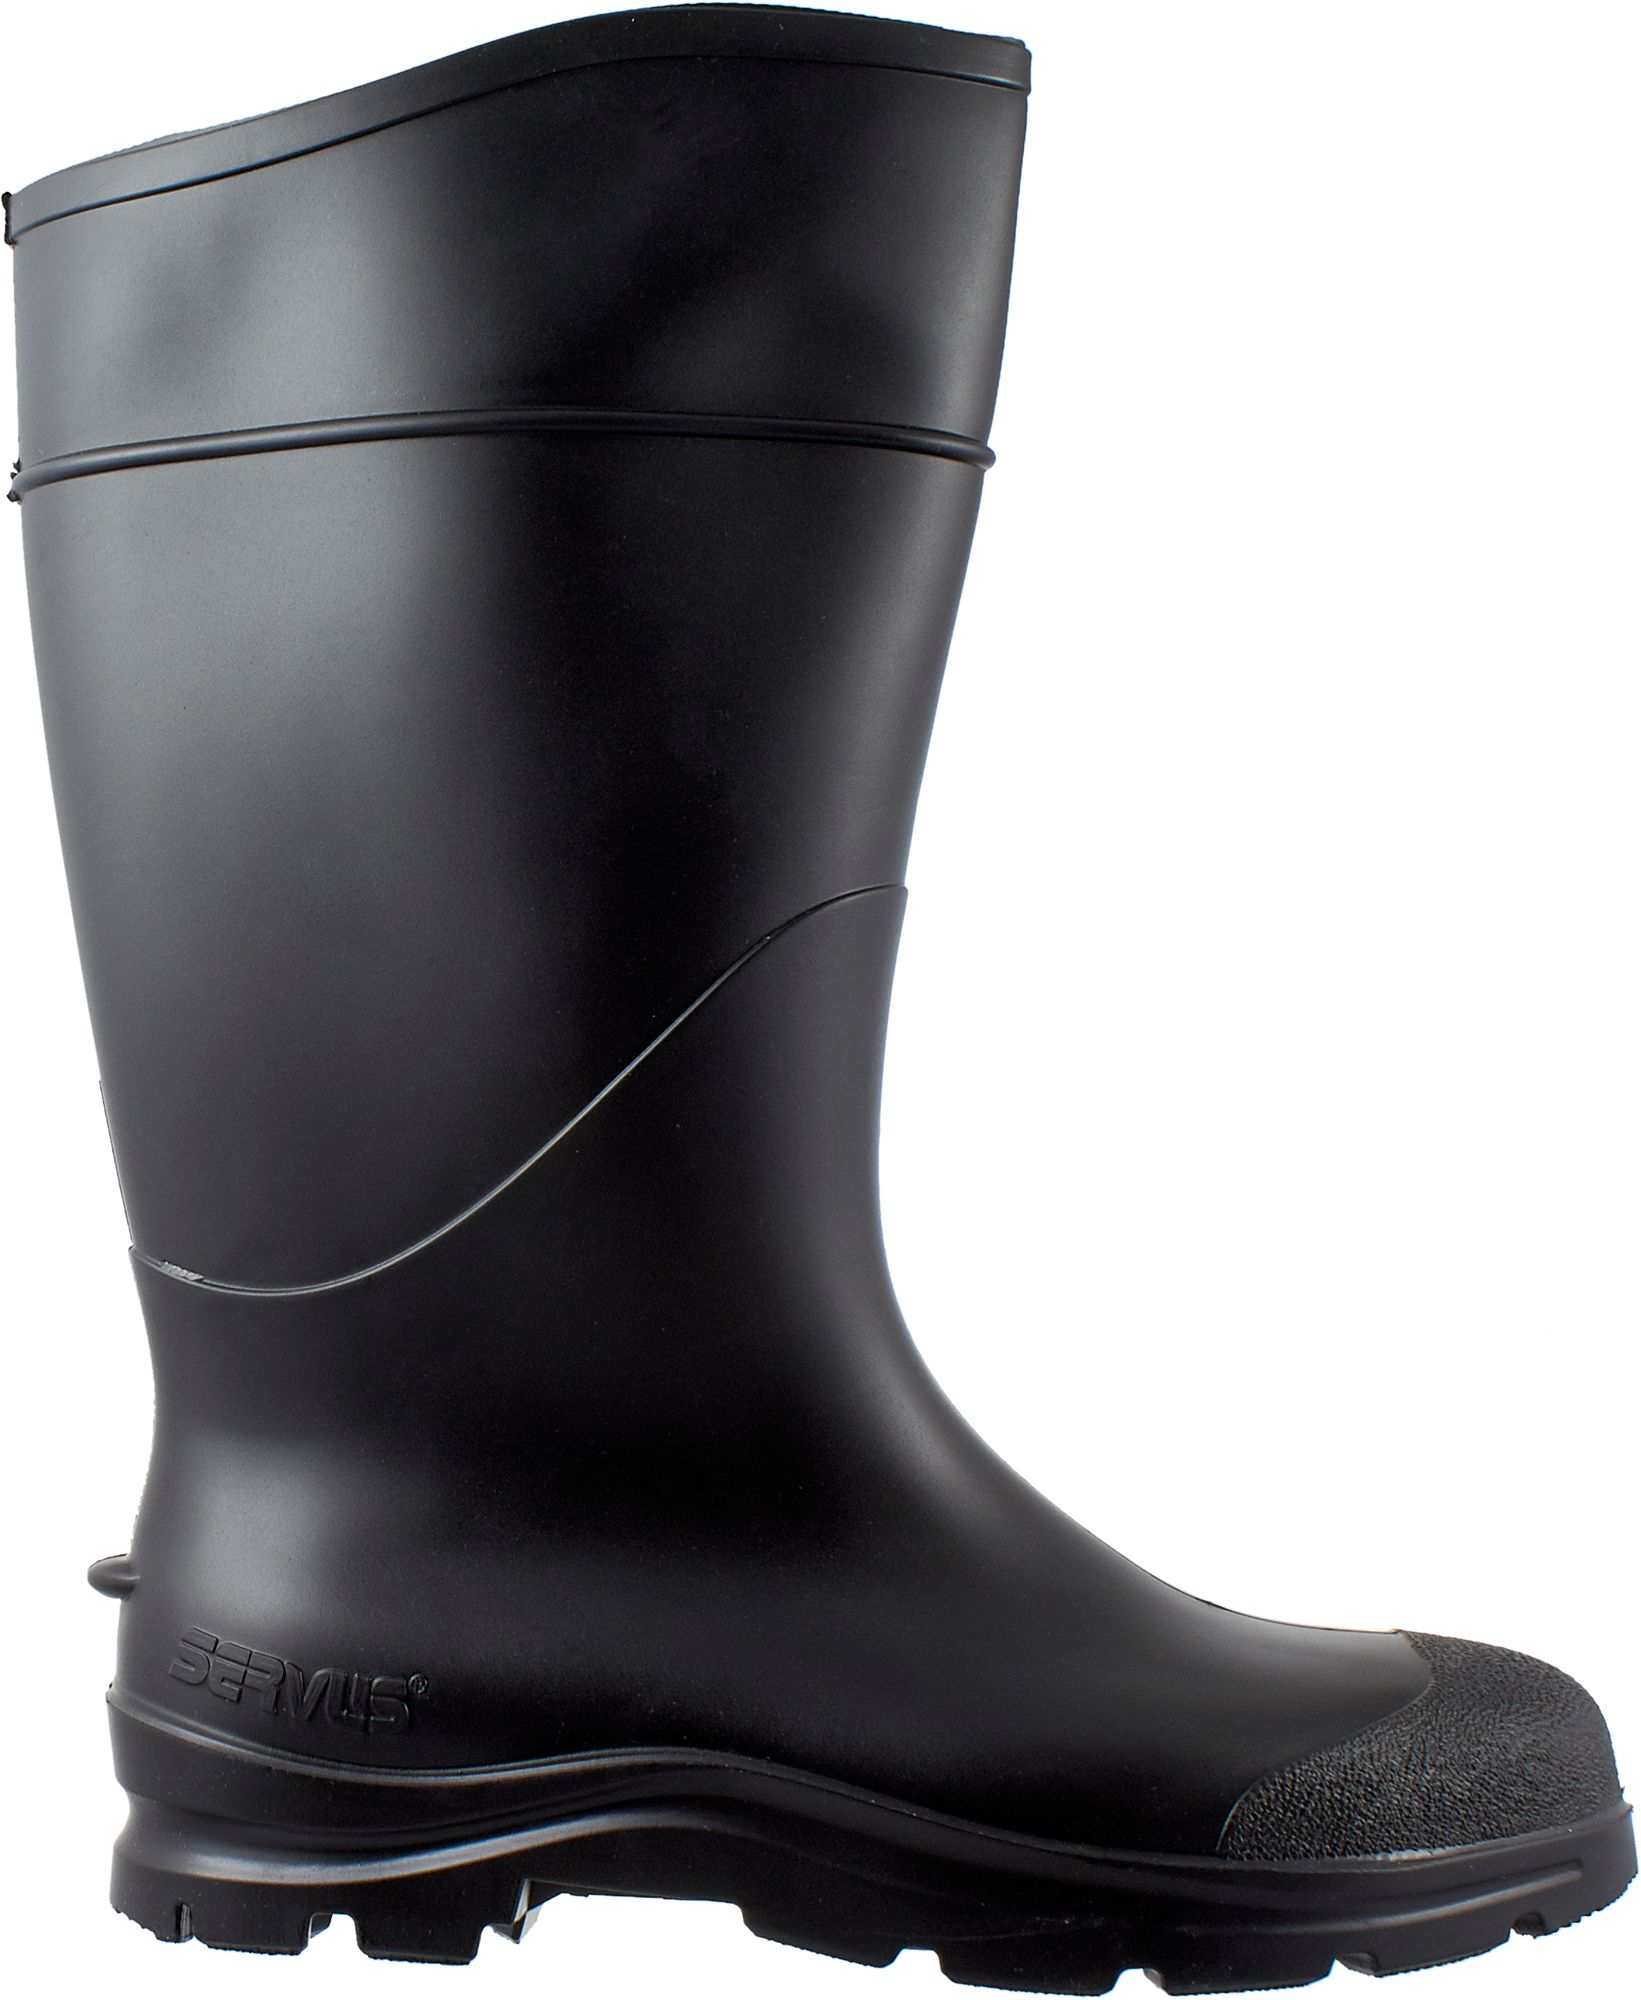 waterproof rubber work boots